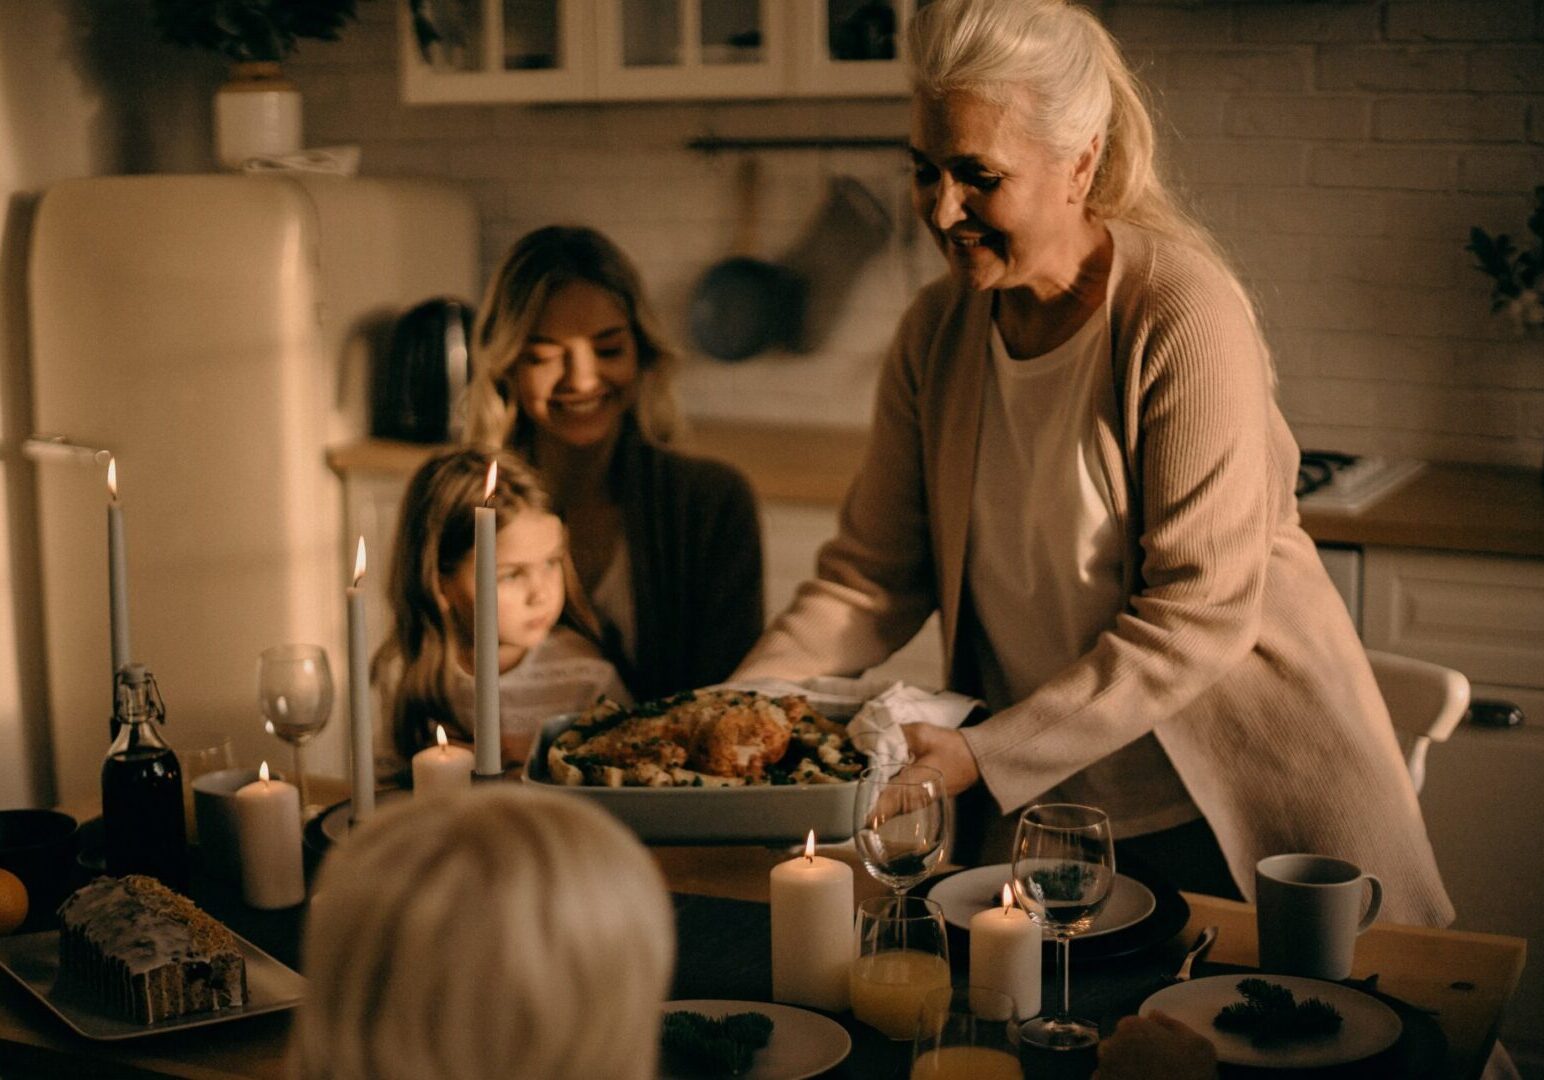 Grandma Serving Dinner Pexels